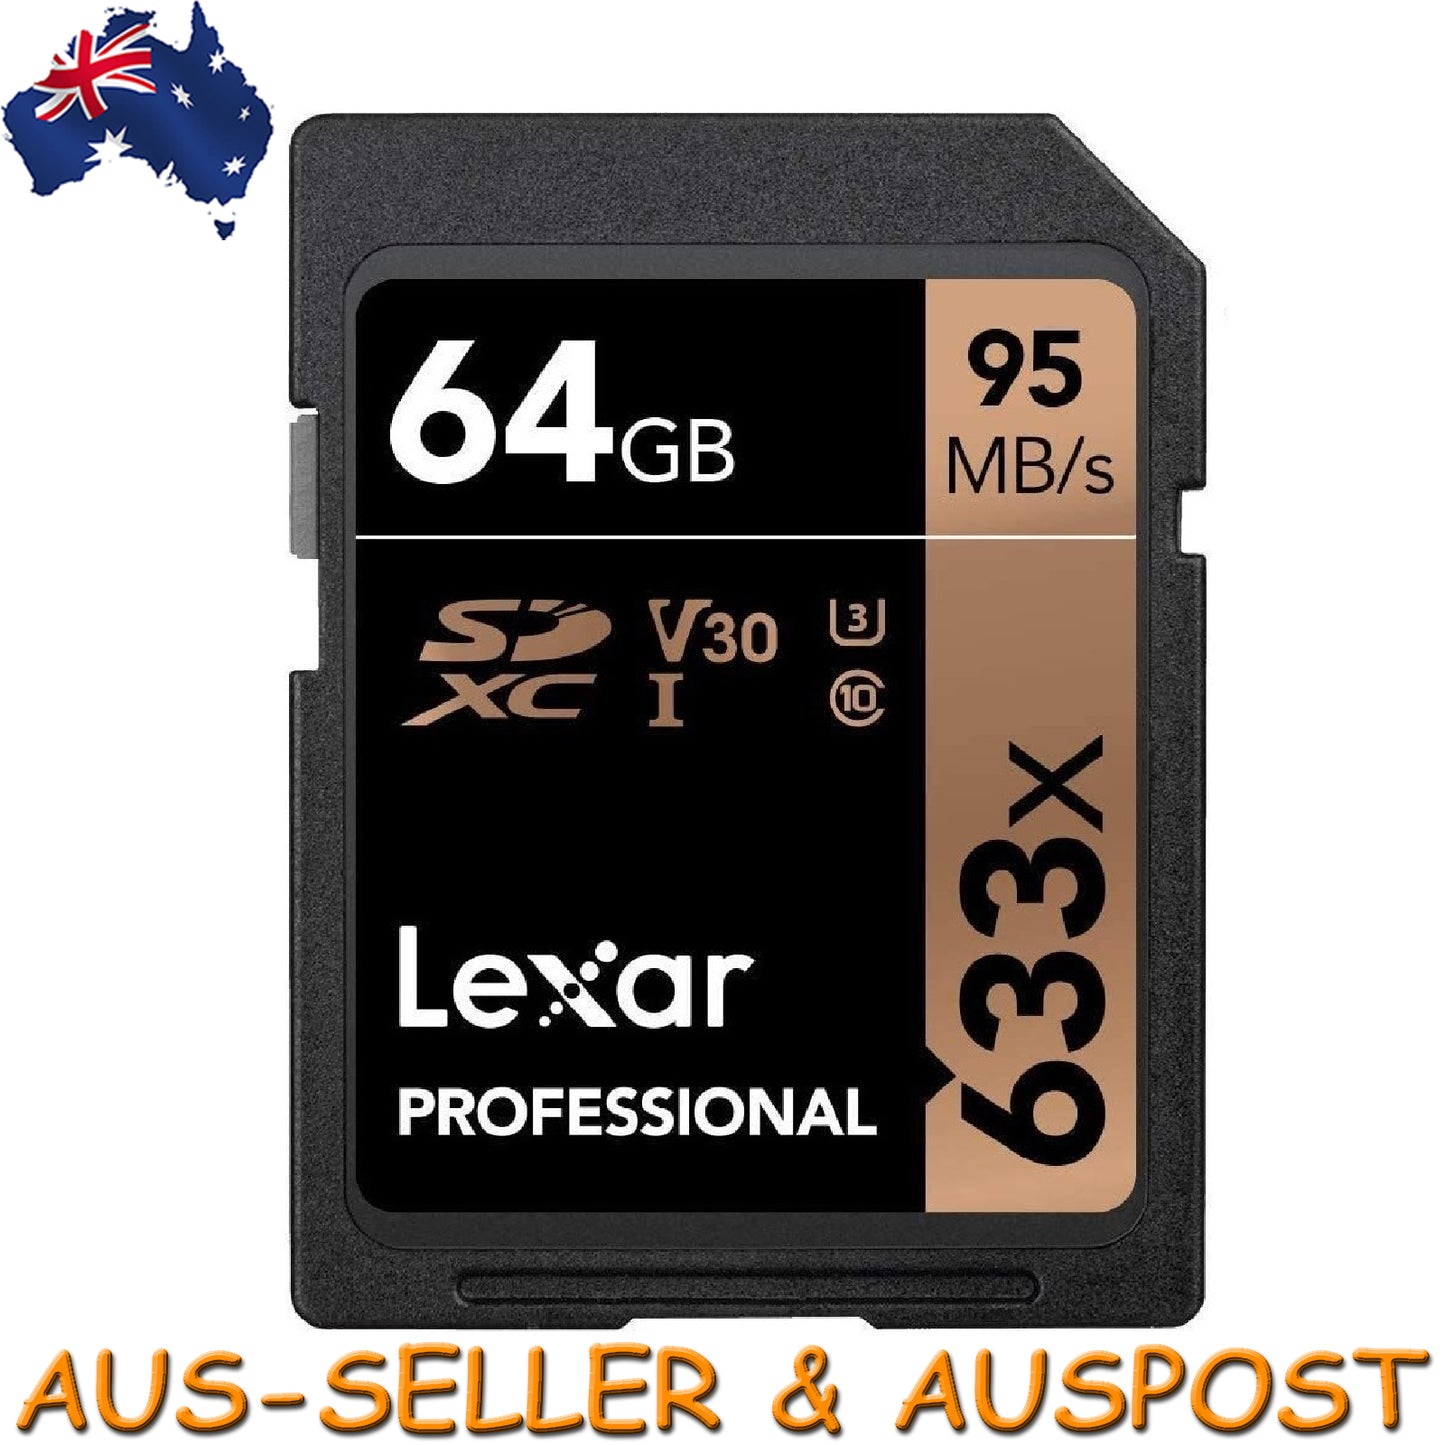 Lexar Professional 64GB SDXC 95MB/s SD Camera Memory TF Card 4K Video DSLR